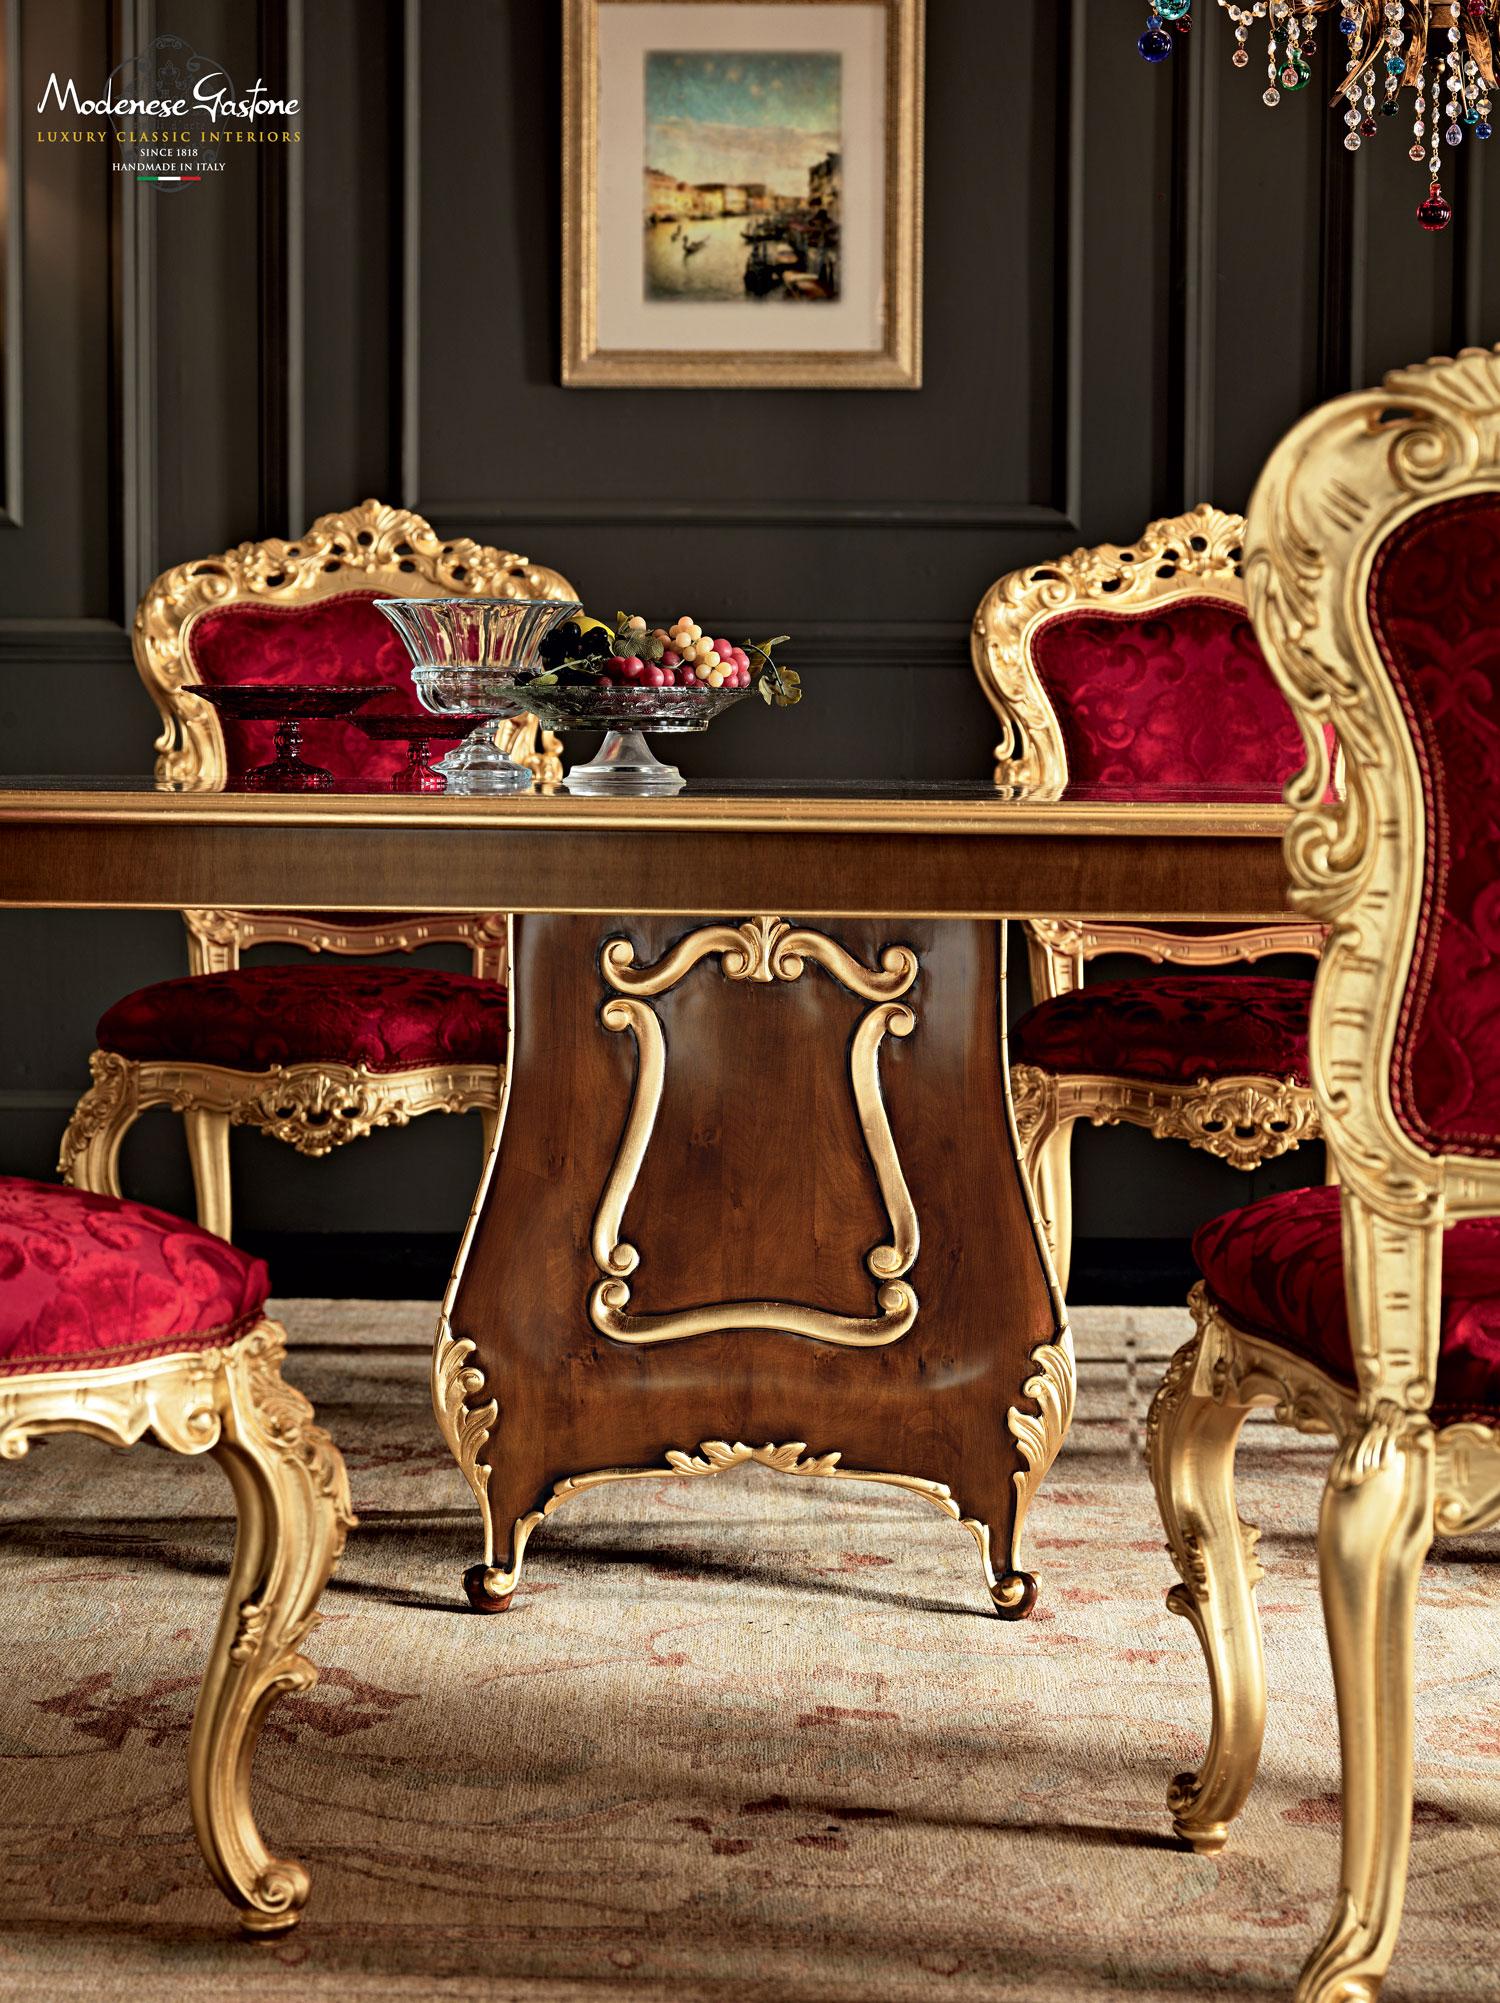 Appliqué Flamboyant Baroque Harp Chair by Modenese Gastone Luxury Interiors For Sale